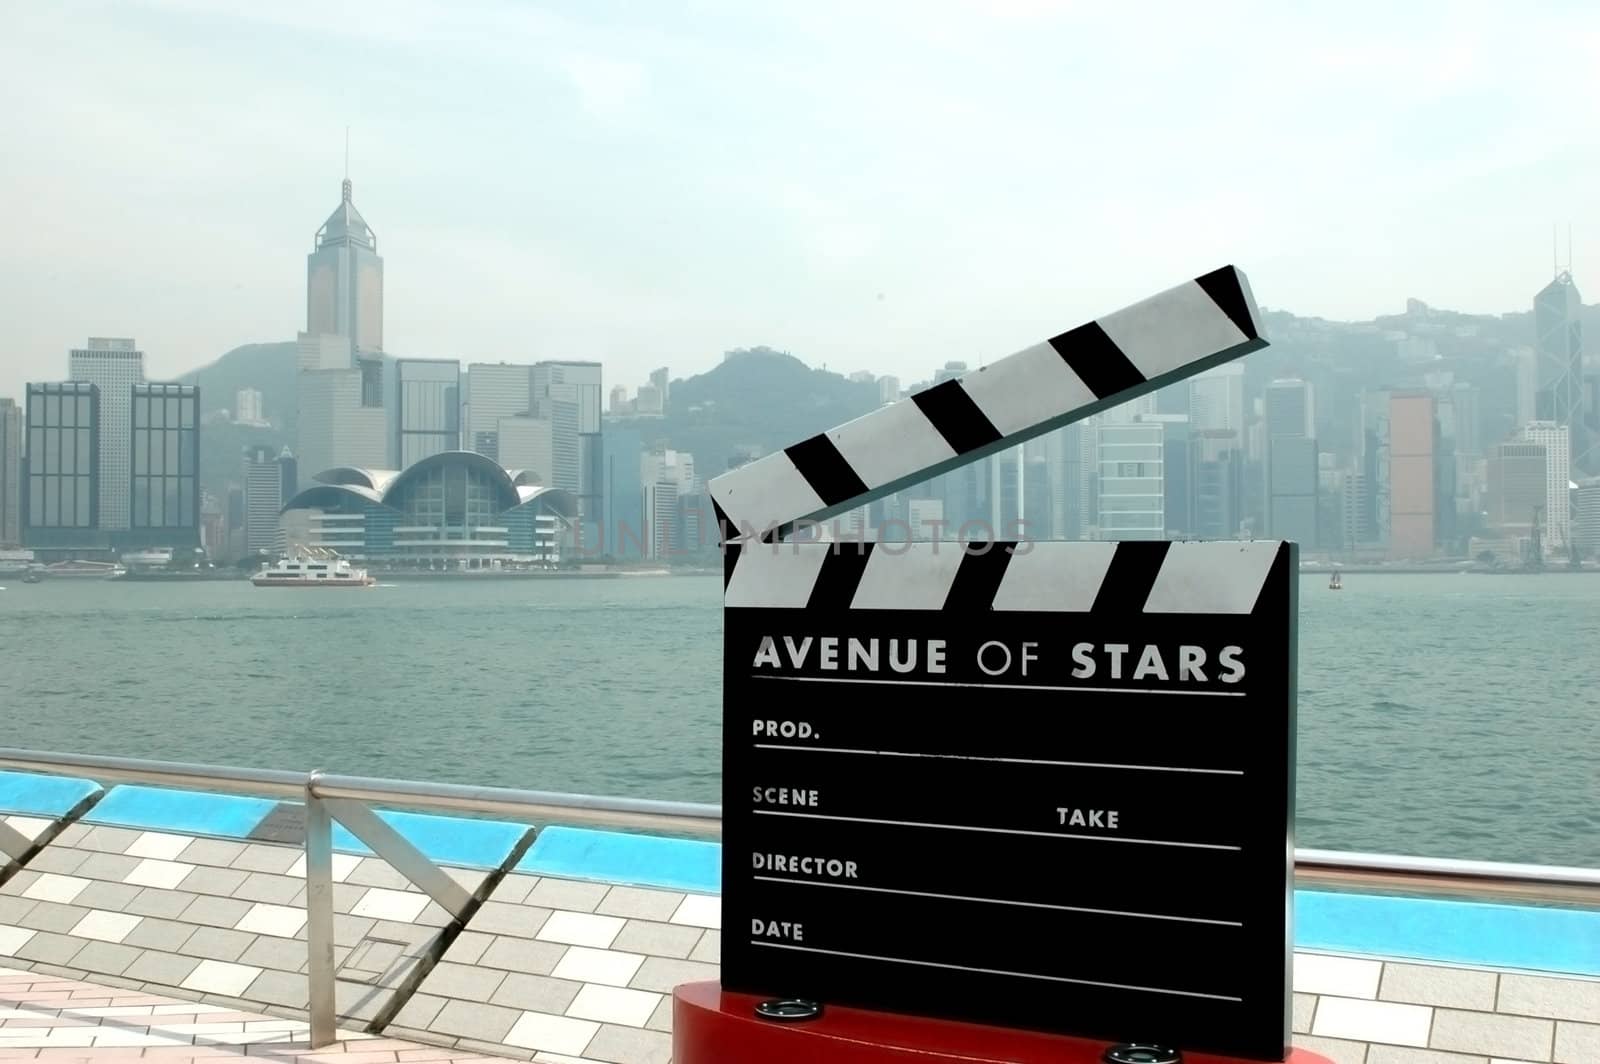 Famous tourism spot in Hongkong - Avenue of Stars.